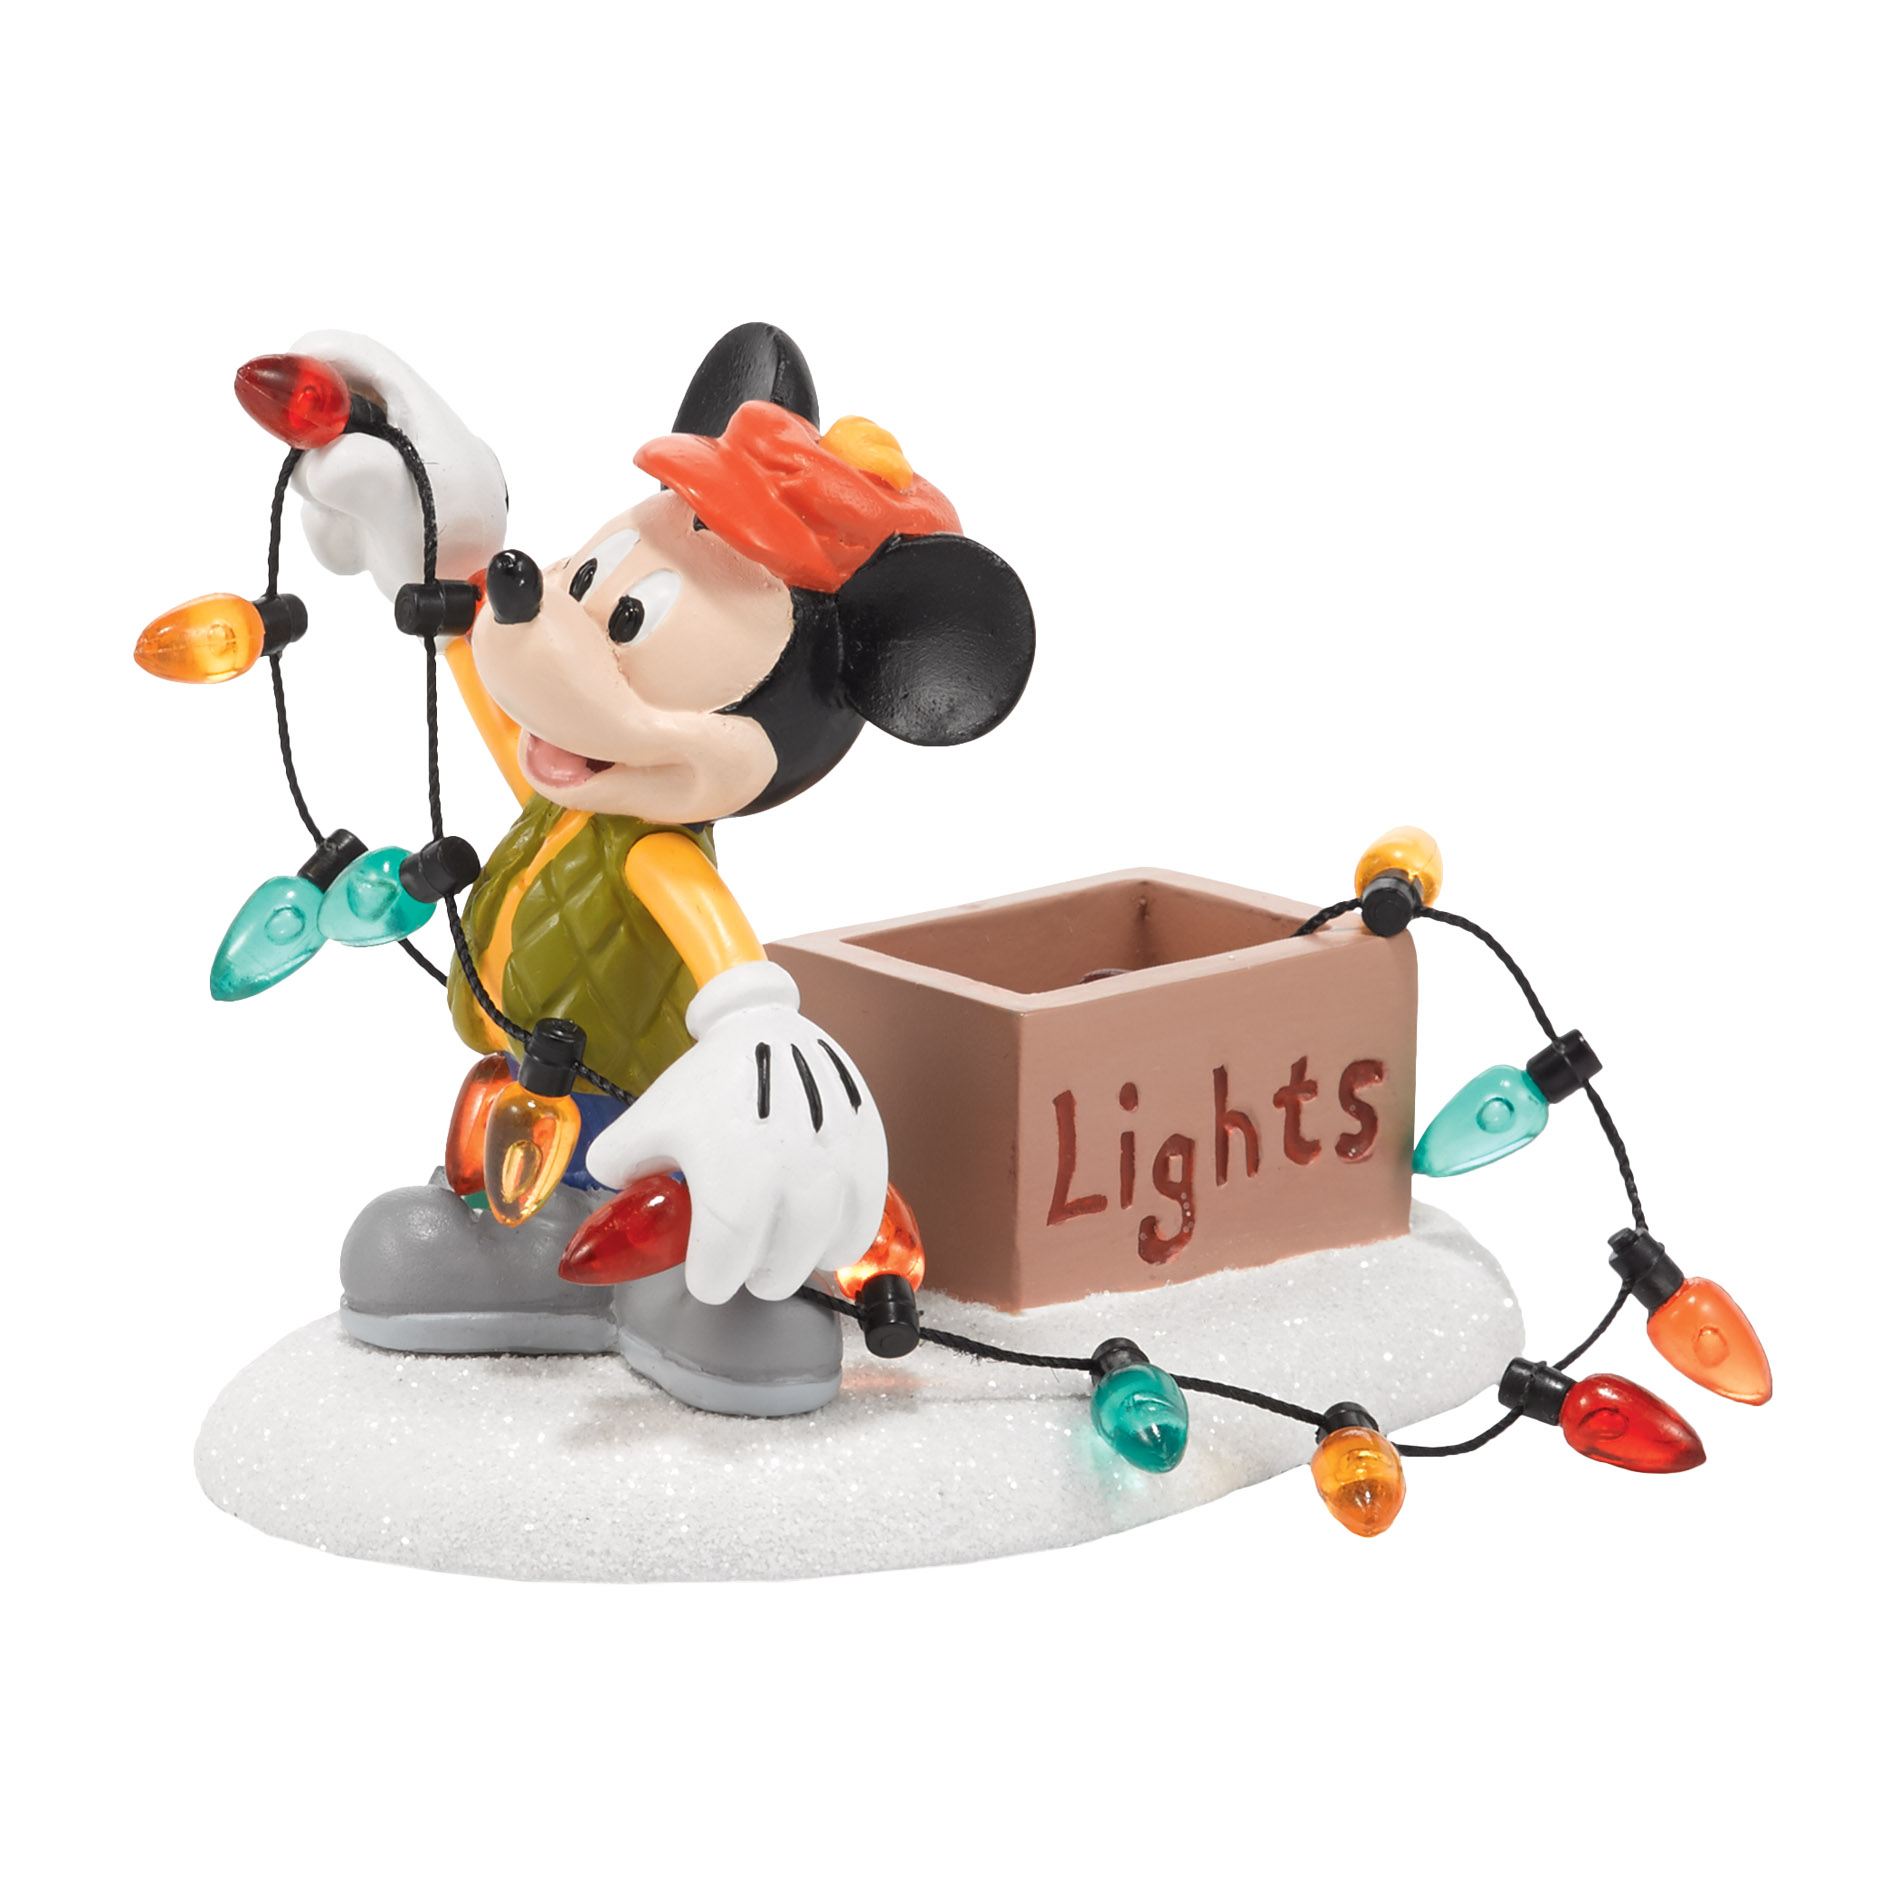 Dept 56 Disney Mickey Mouse Resin Christmas Figurine